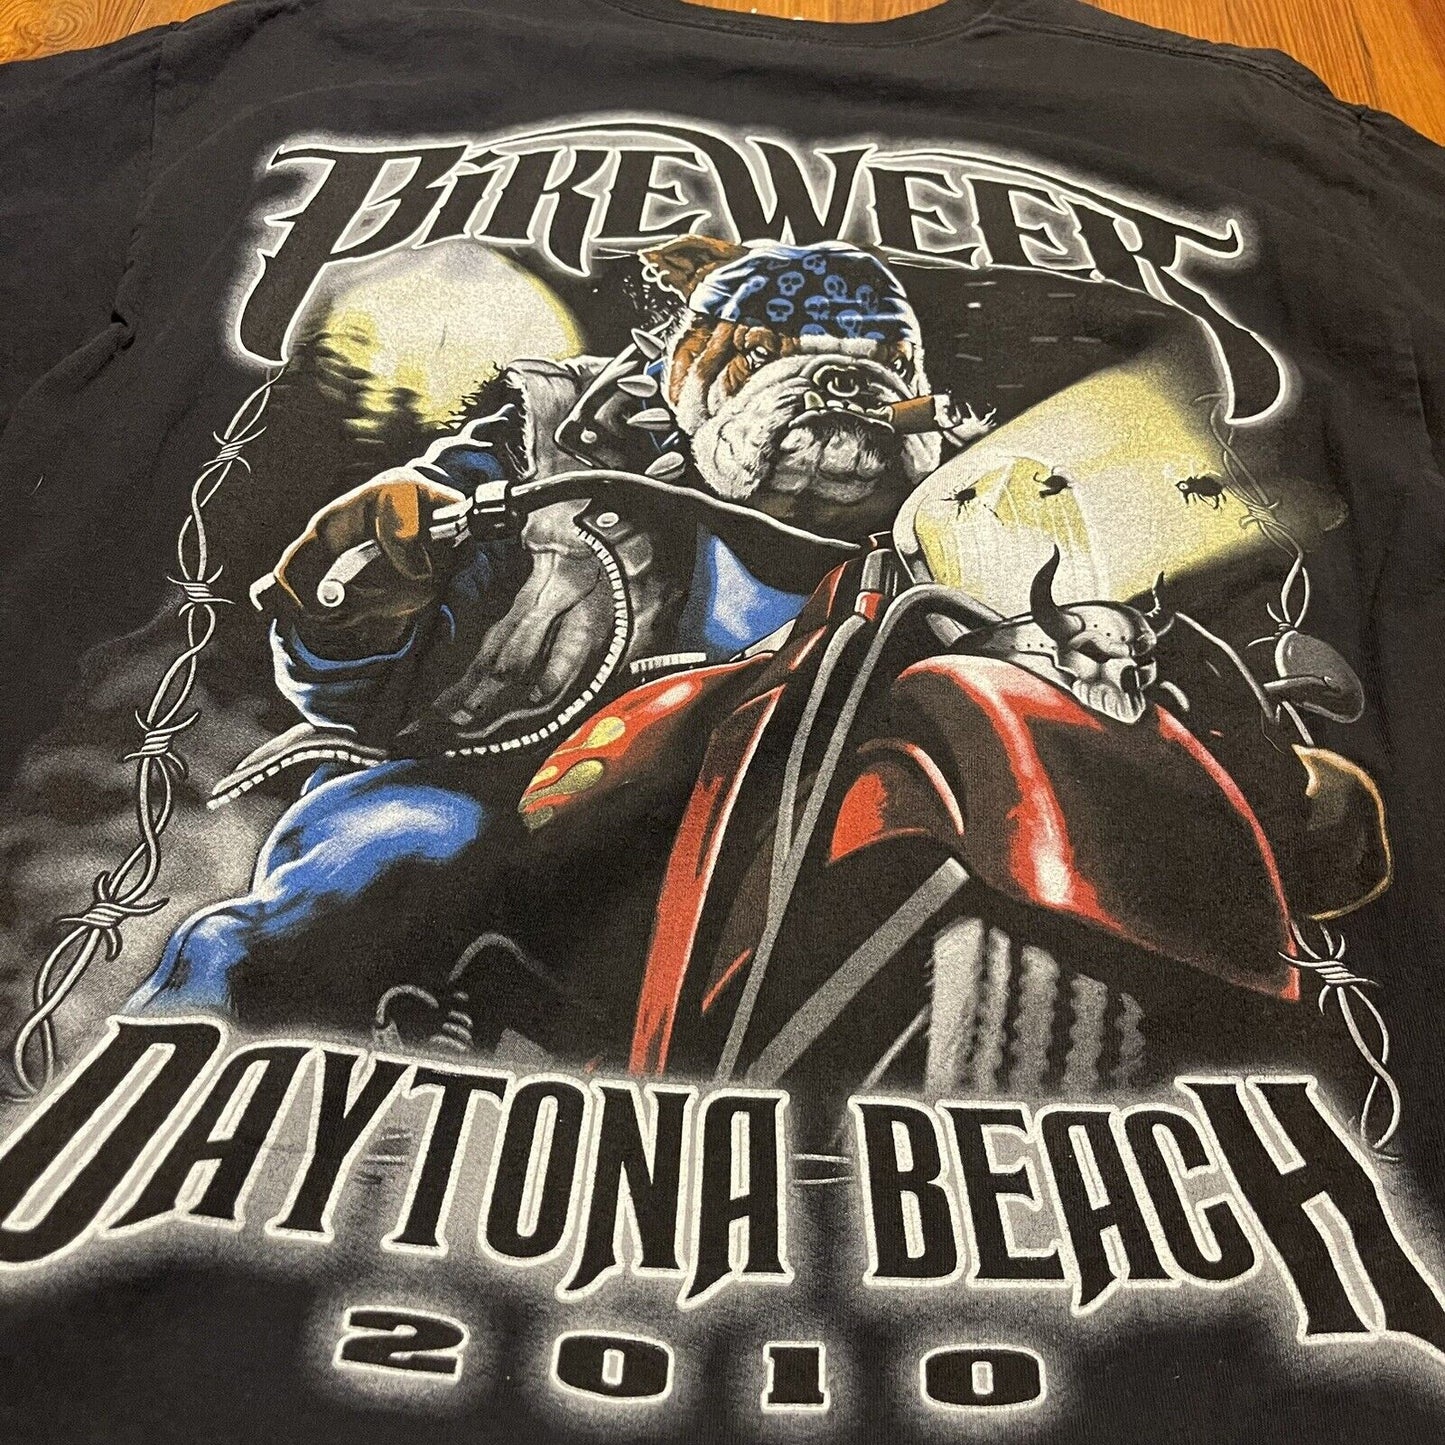 2010 Daytona Bike Week T Shirt Motorcycle Size Large